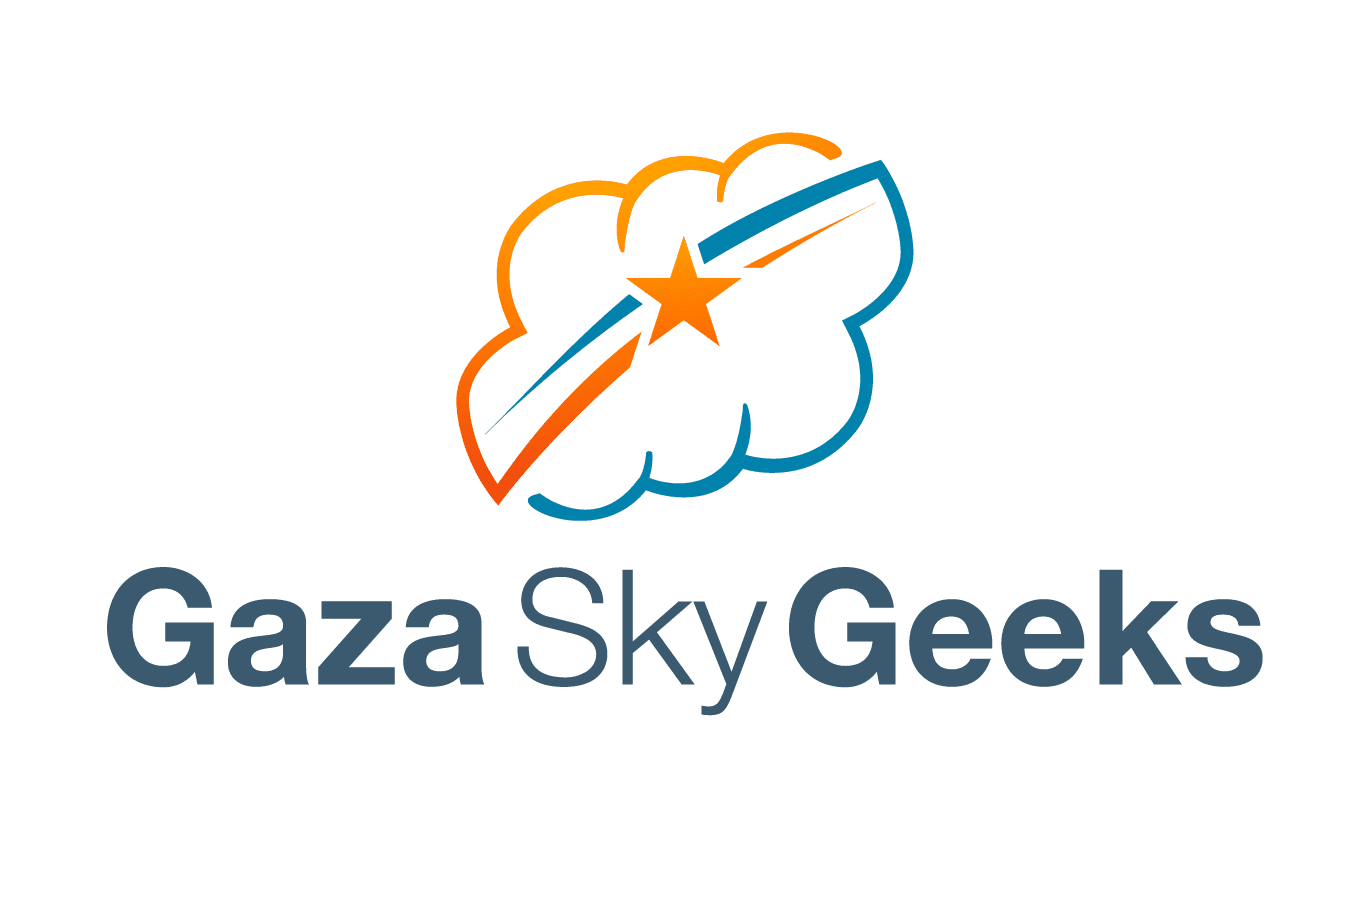 Gaza Sky Geeks